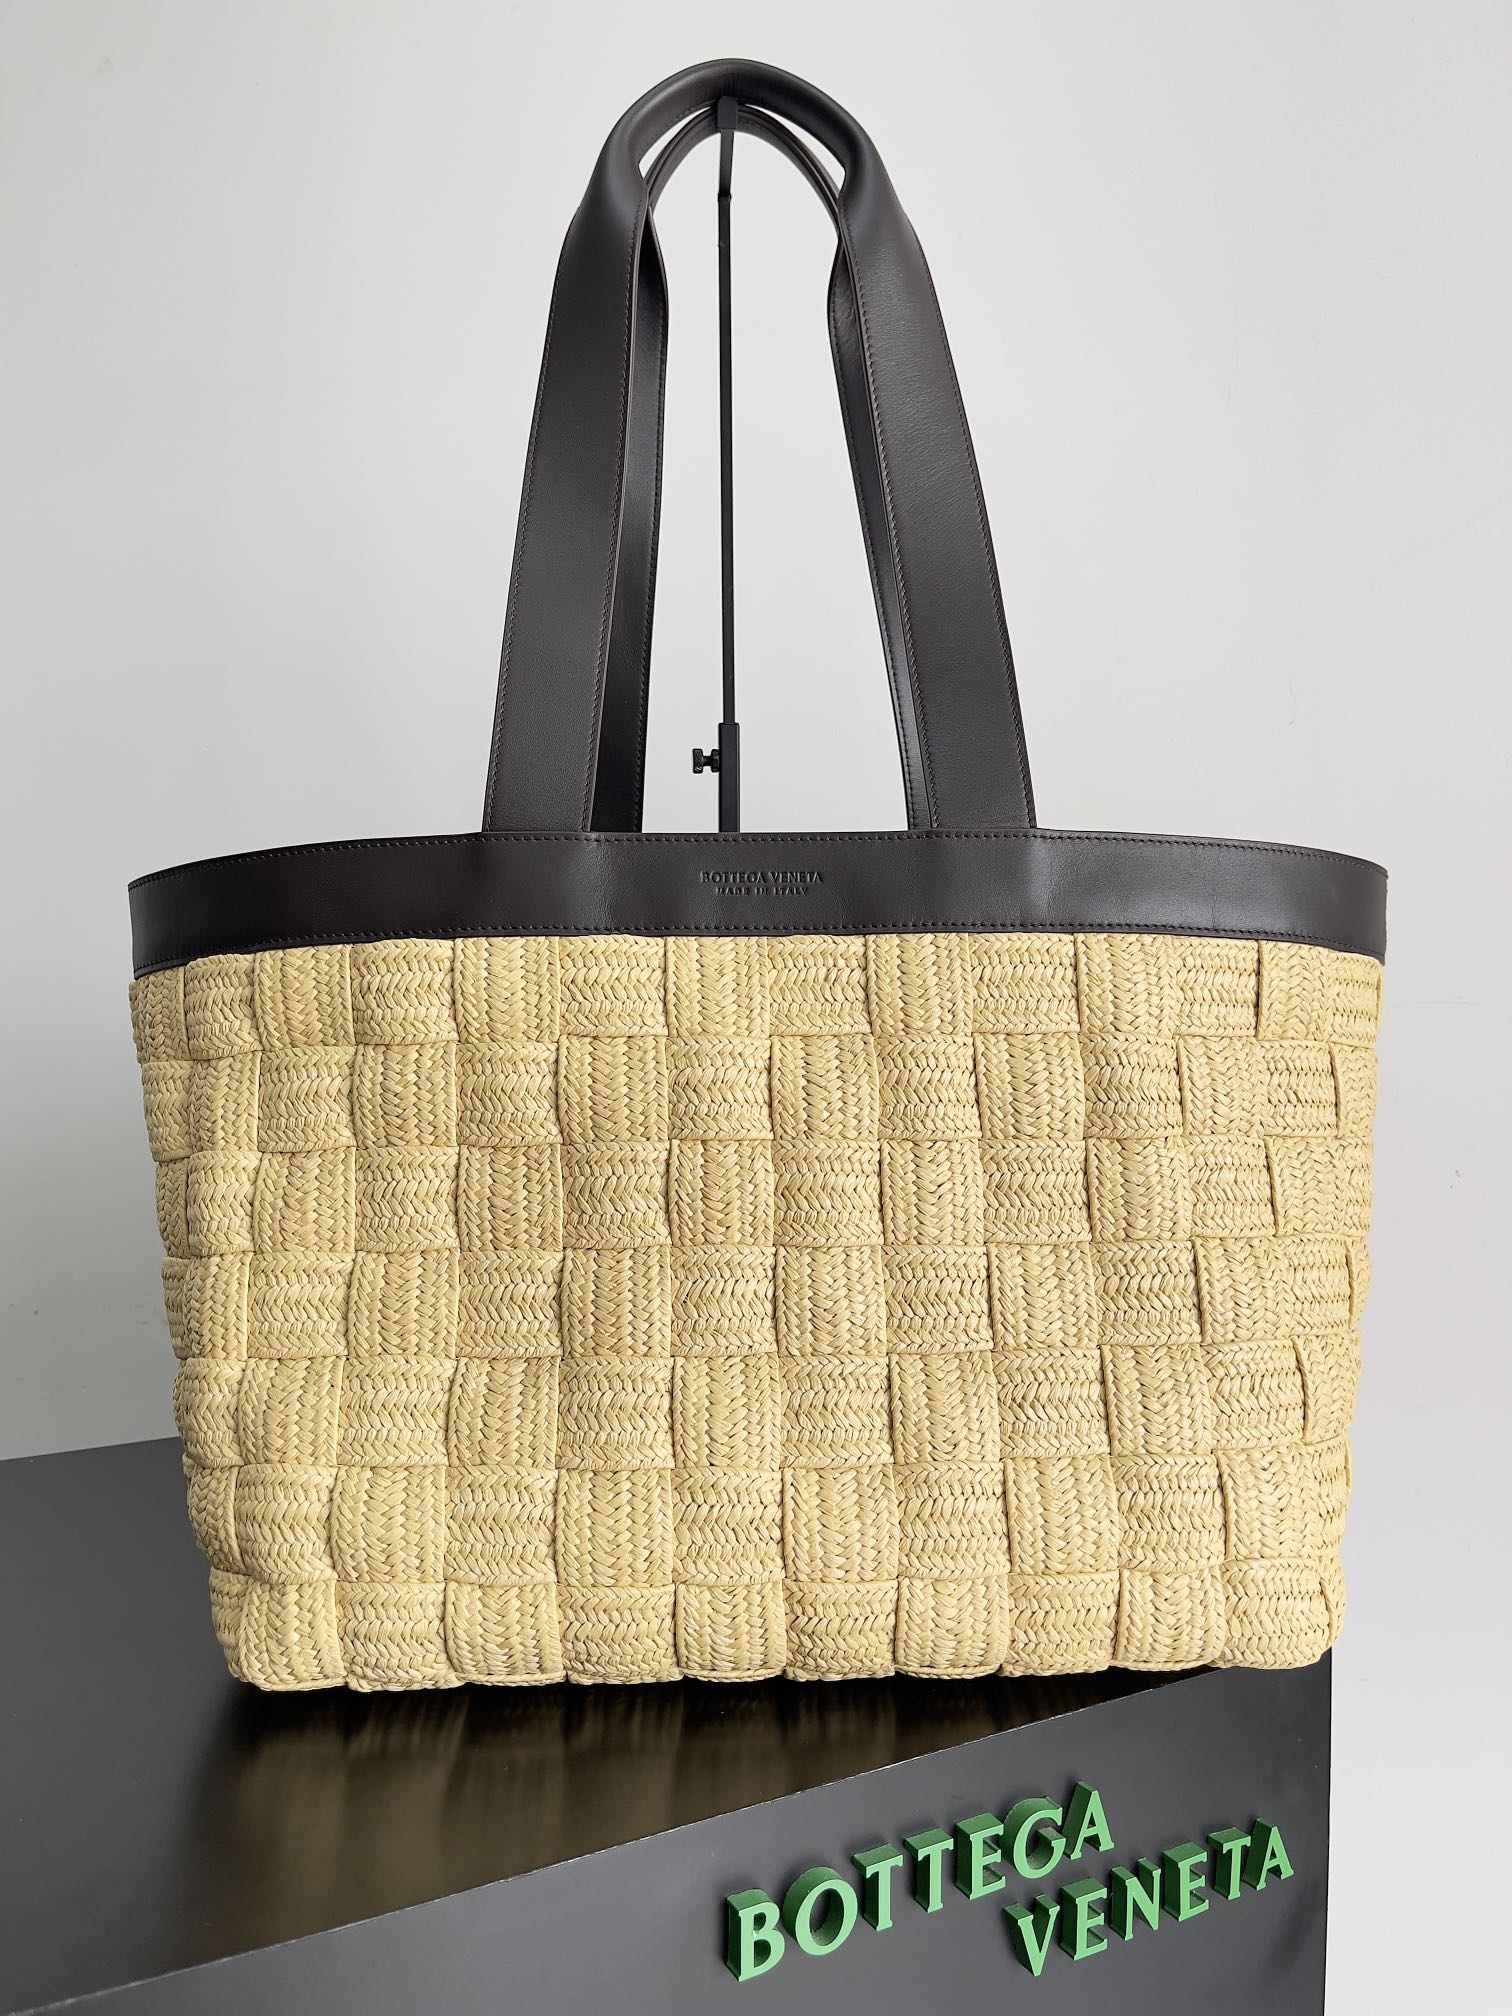 Bottega Veneta Handbags Clutches & Pouch Bags Crossbody & Shoulder Bags Tote Bags Lambskin Sheepskin Straw Woven Fashion